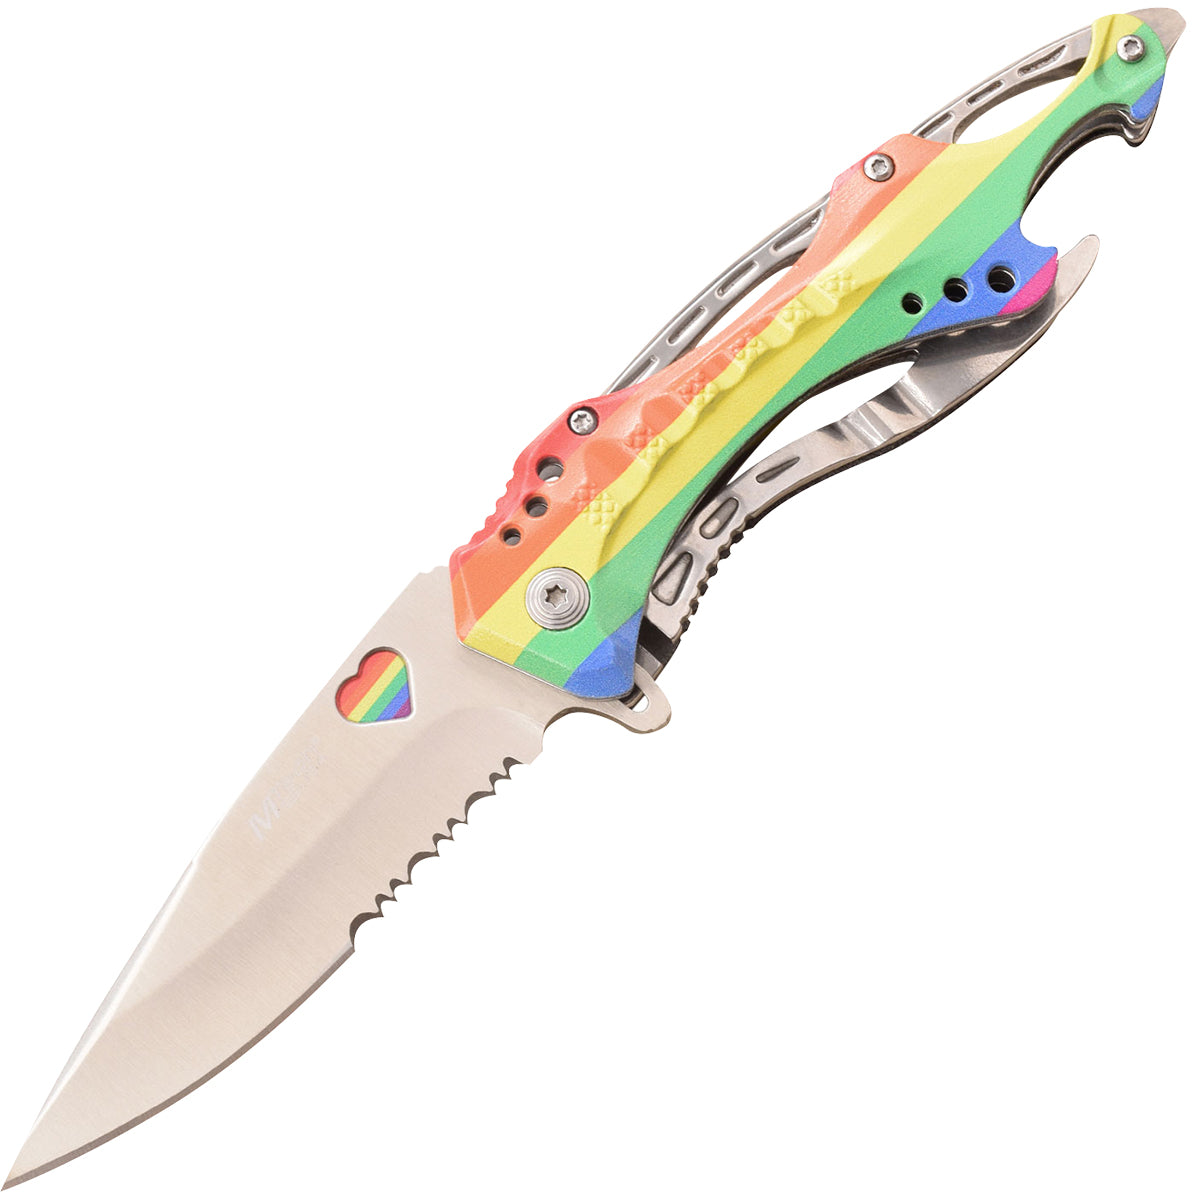 MTech USA Ballistic Linerlock Spring Assisted Folding Knife, Rainbow, MT-A705RB M-Tech